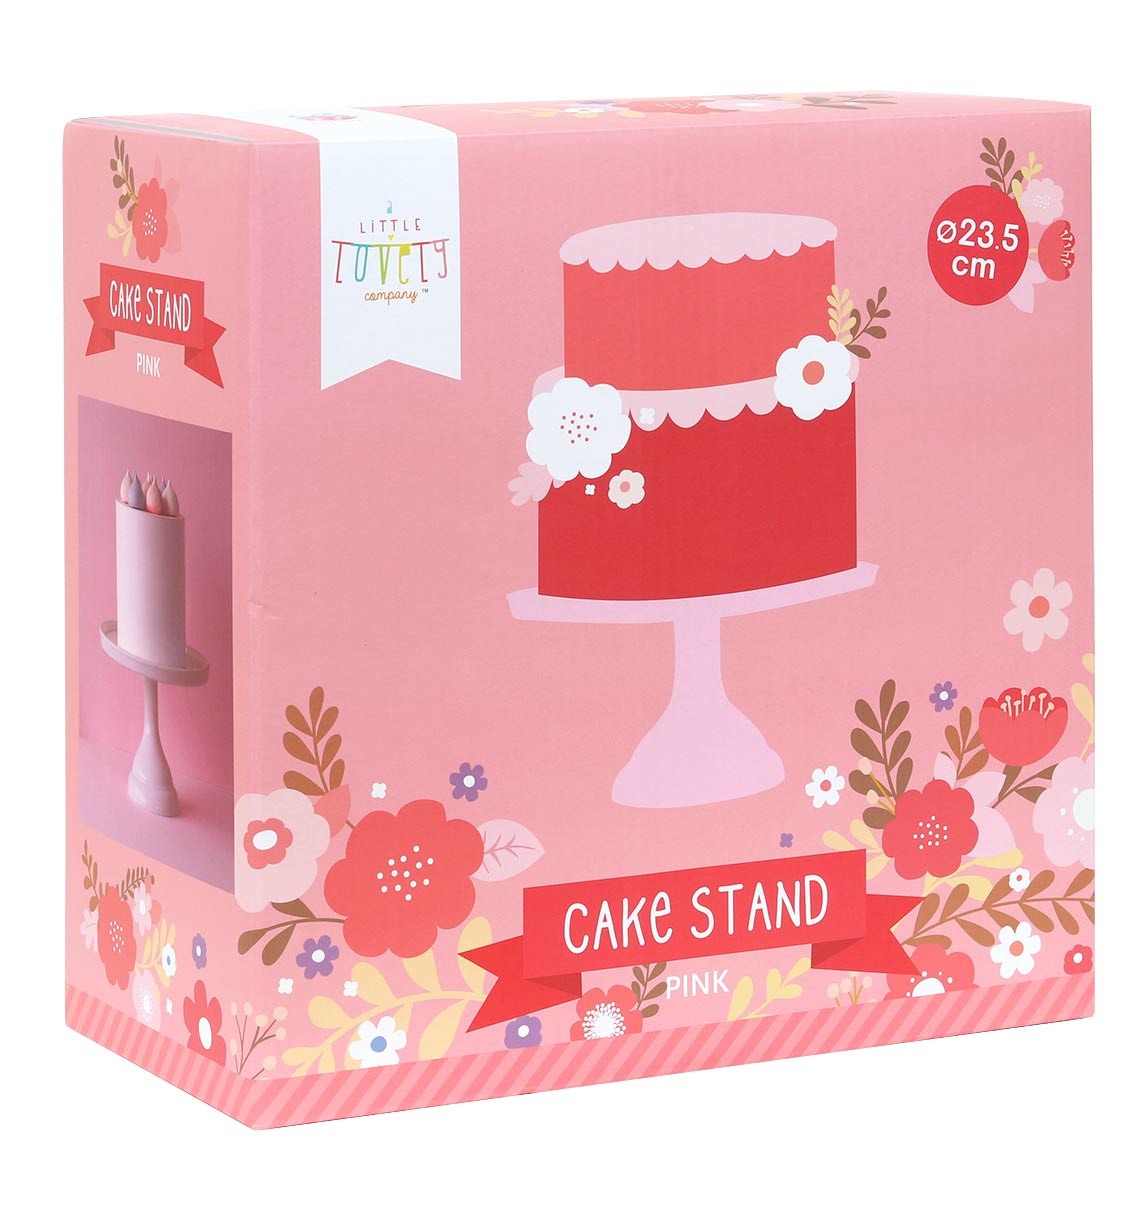 ALLC Cake Stand Small PTCSPI09 rose 23.5x12x23.5cm